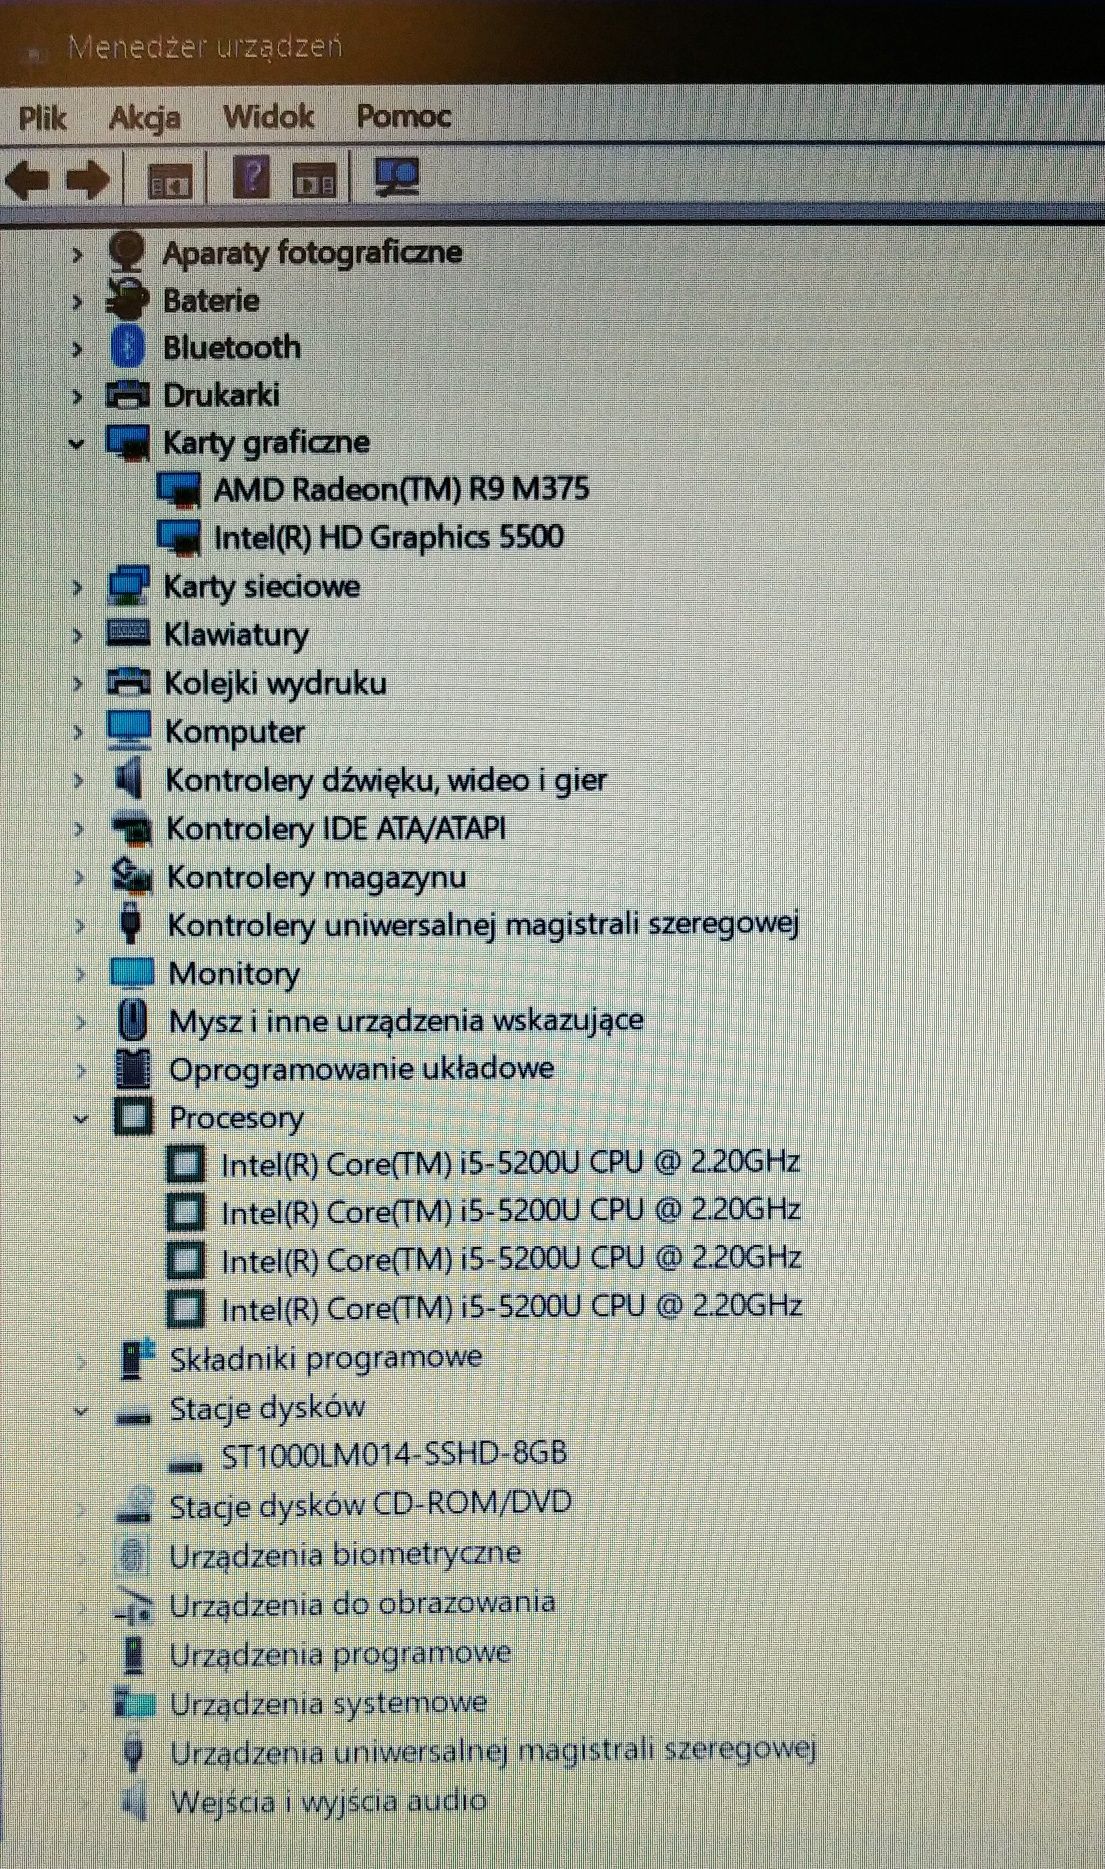 Laptop Lenovo Z51 i5/4GB/1000GB/Radeon R9 M375/Full HD/Win 10 Home